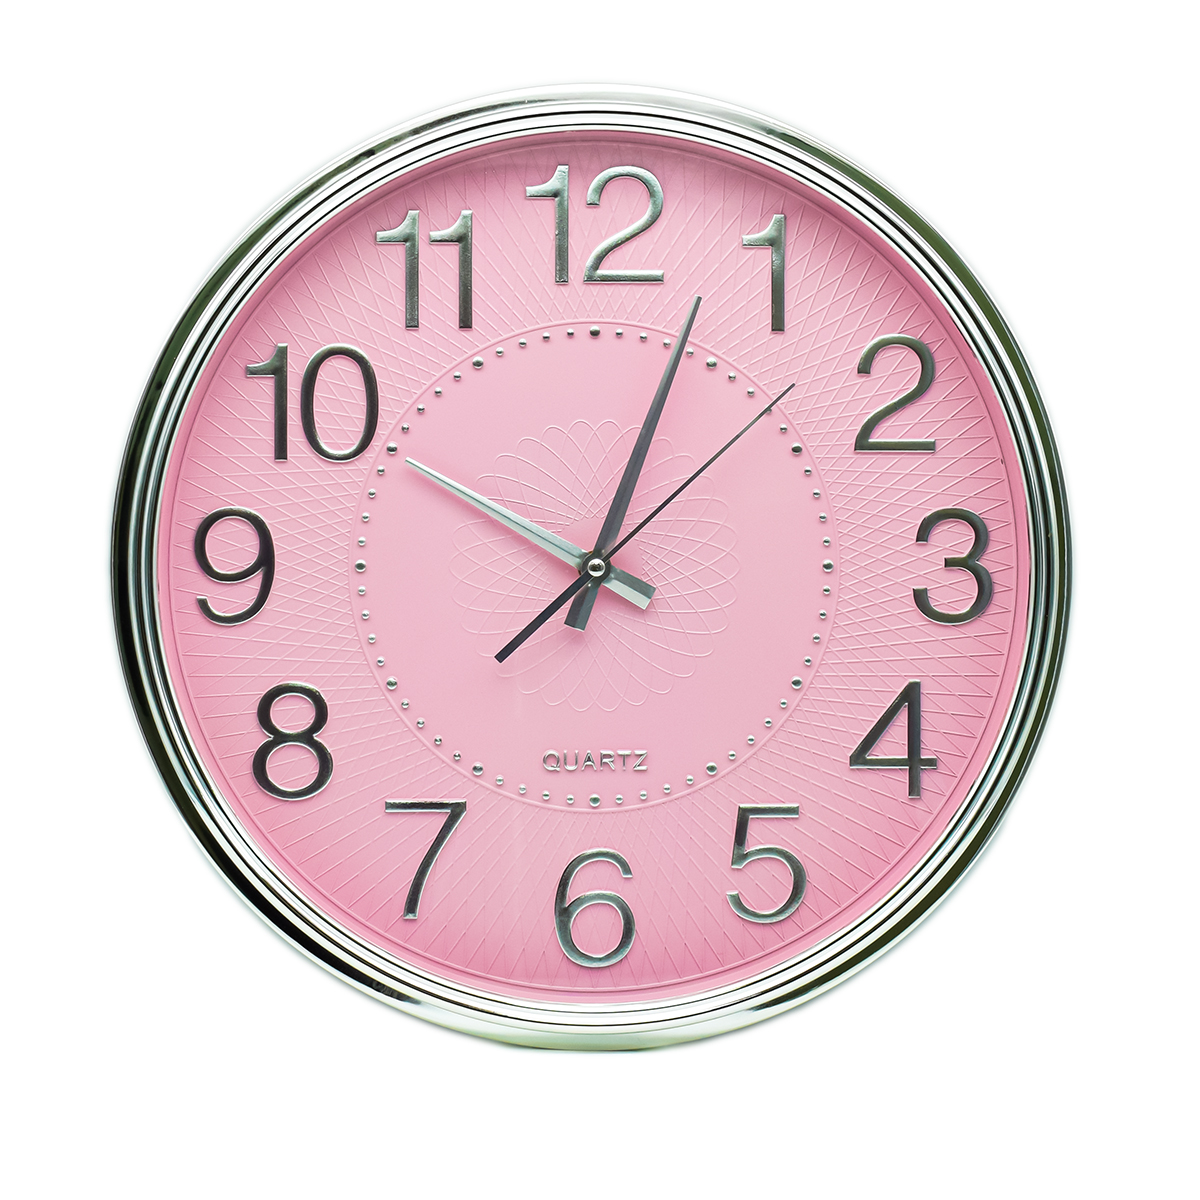 Ceas de perete 40 x 40 cm cu mecanism silentios, D3336, argintiu/roz image0